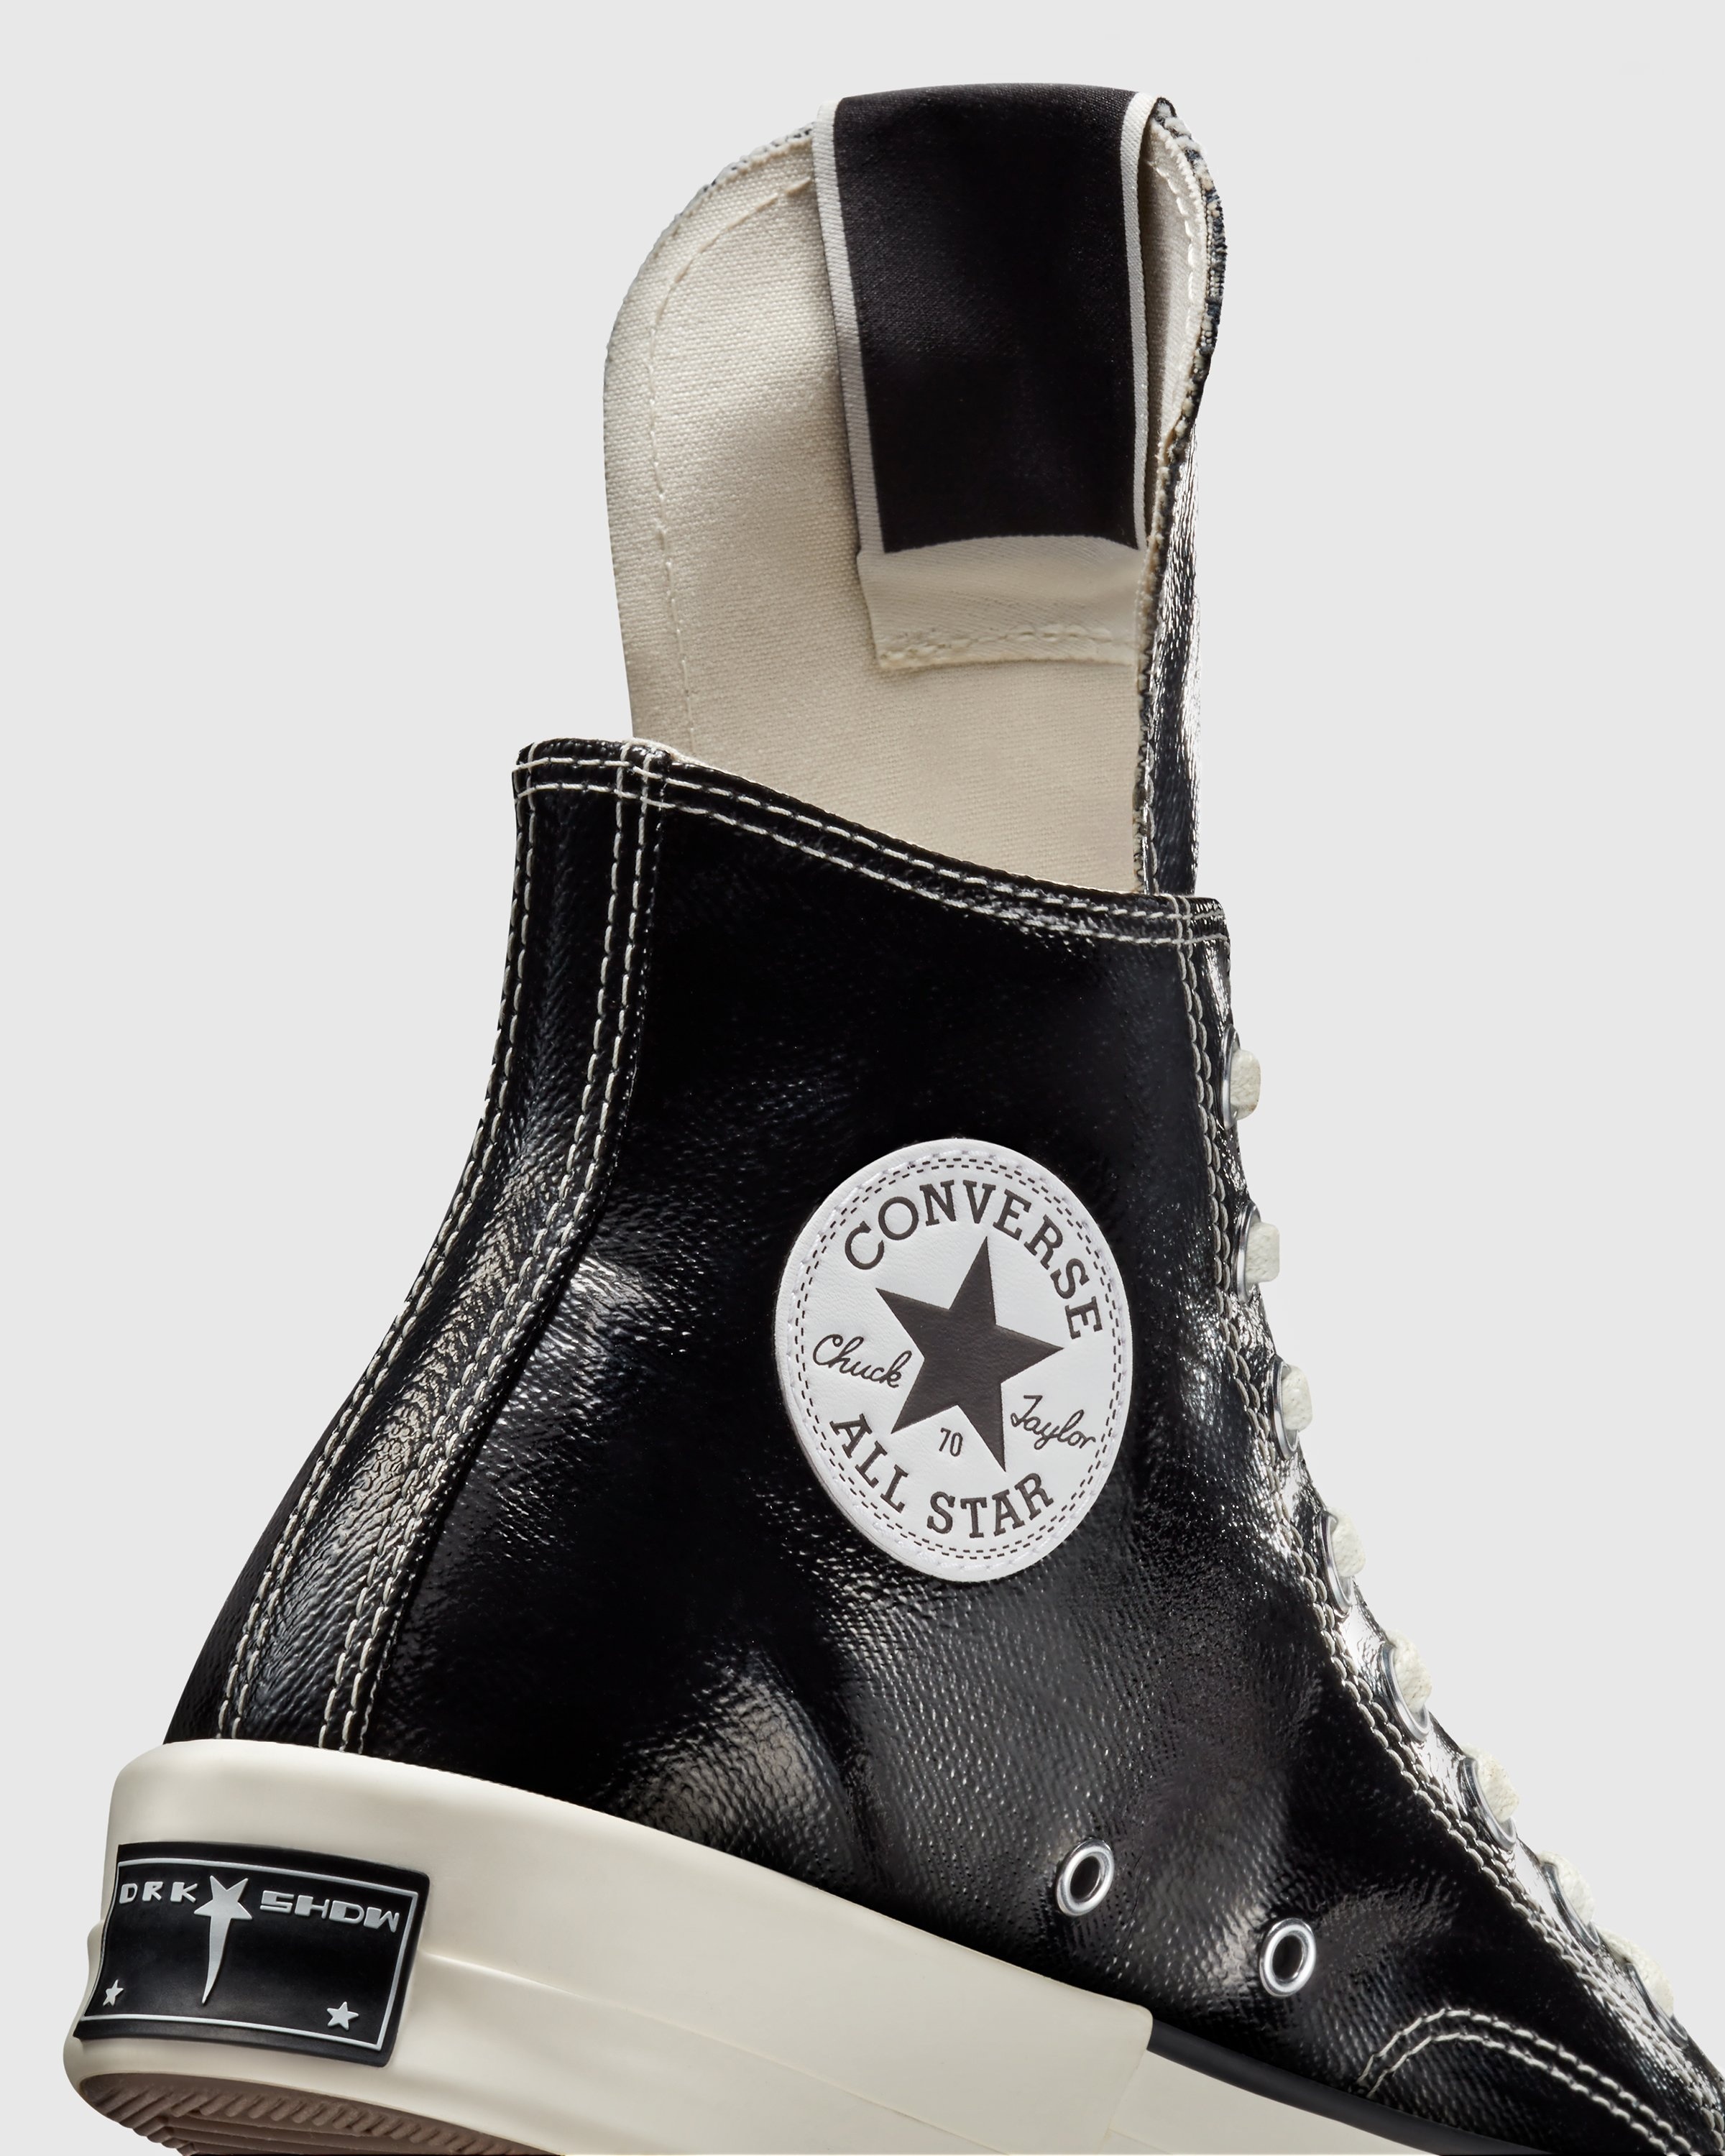 Converse x DRKSHDW – DRKSHDW TURBODRK Chuck 70 Hi Black/Egret/Bone White - High Top Sneakers - Black - Image 4